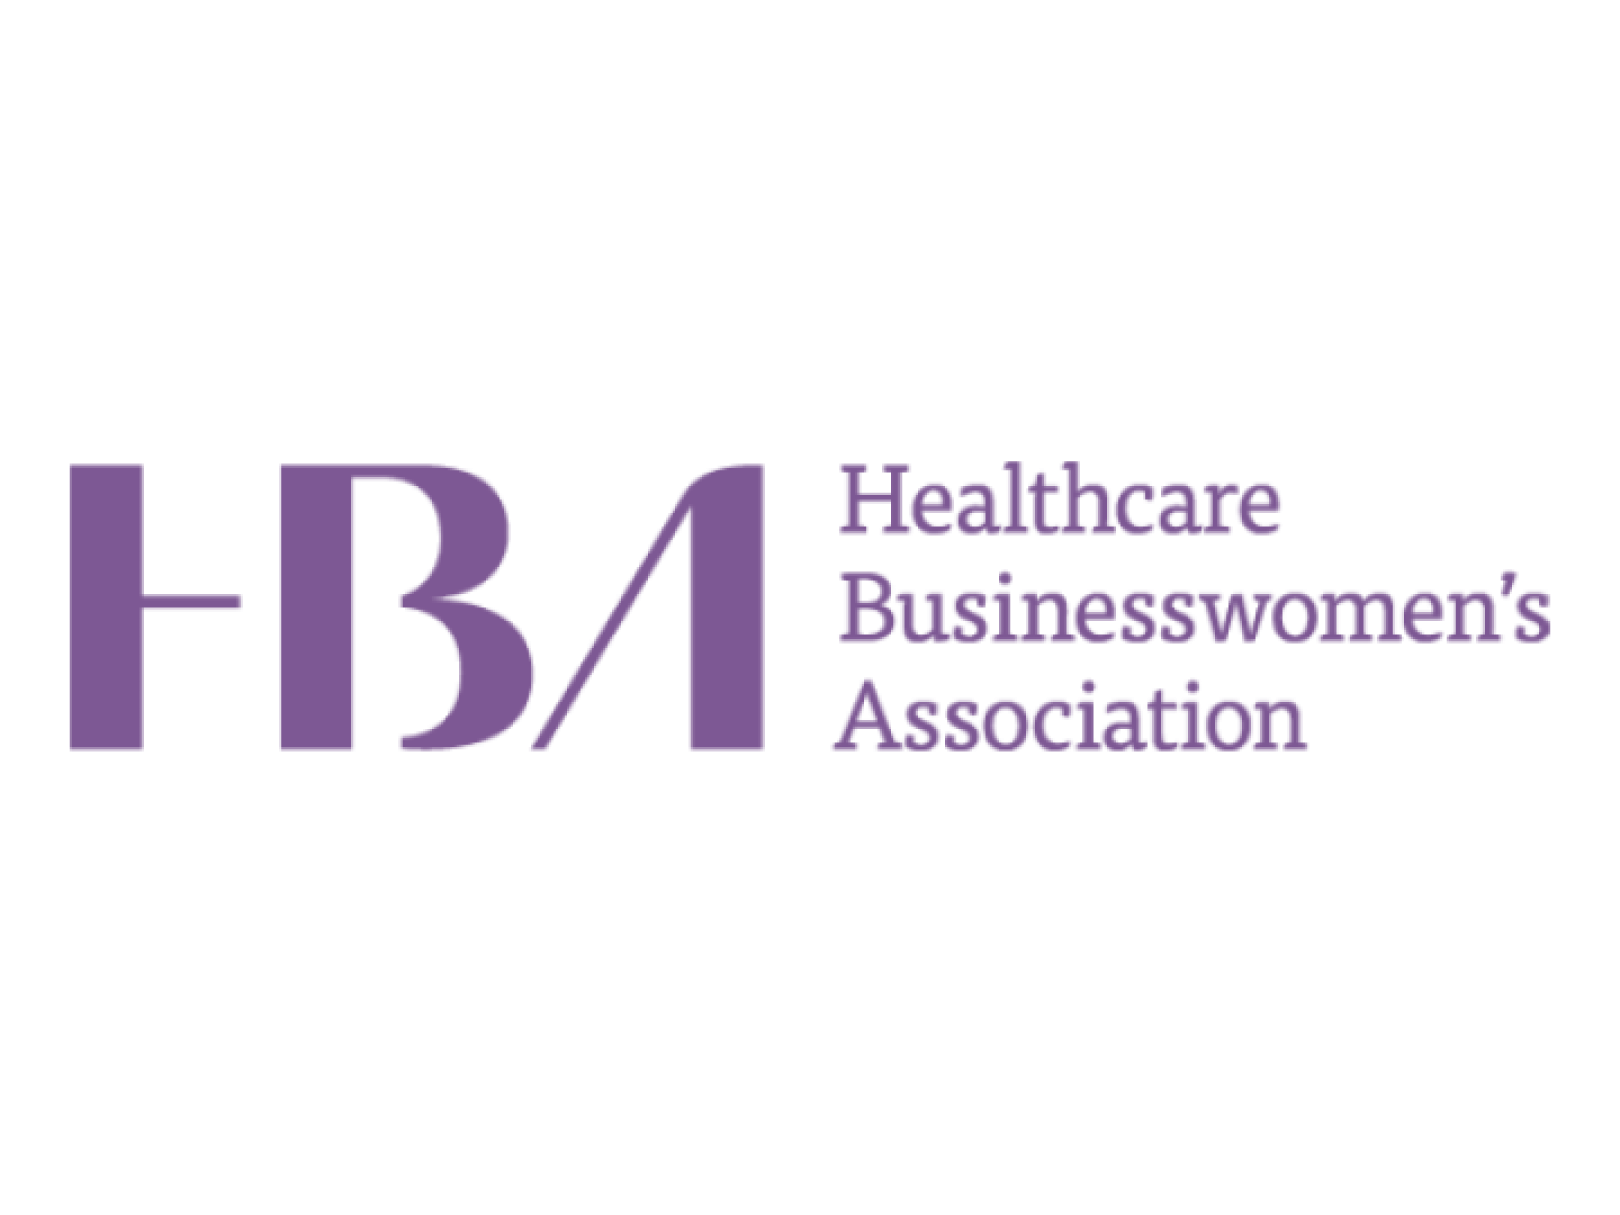 Healthcare Businesswomen's Association